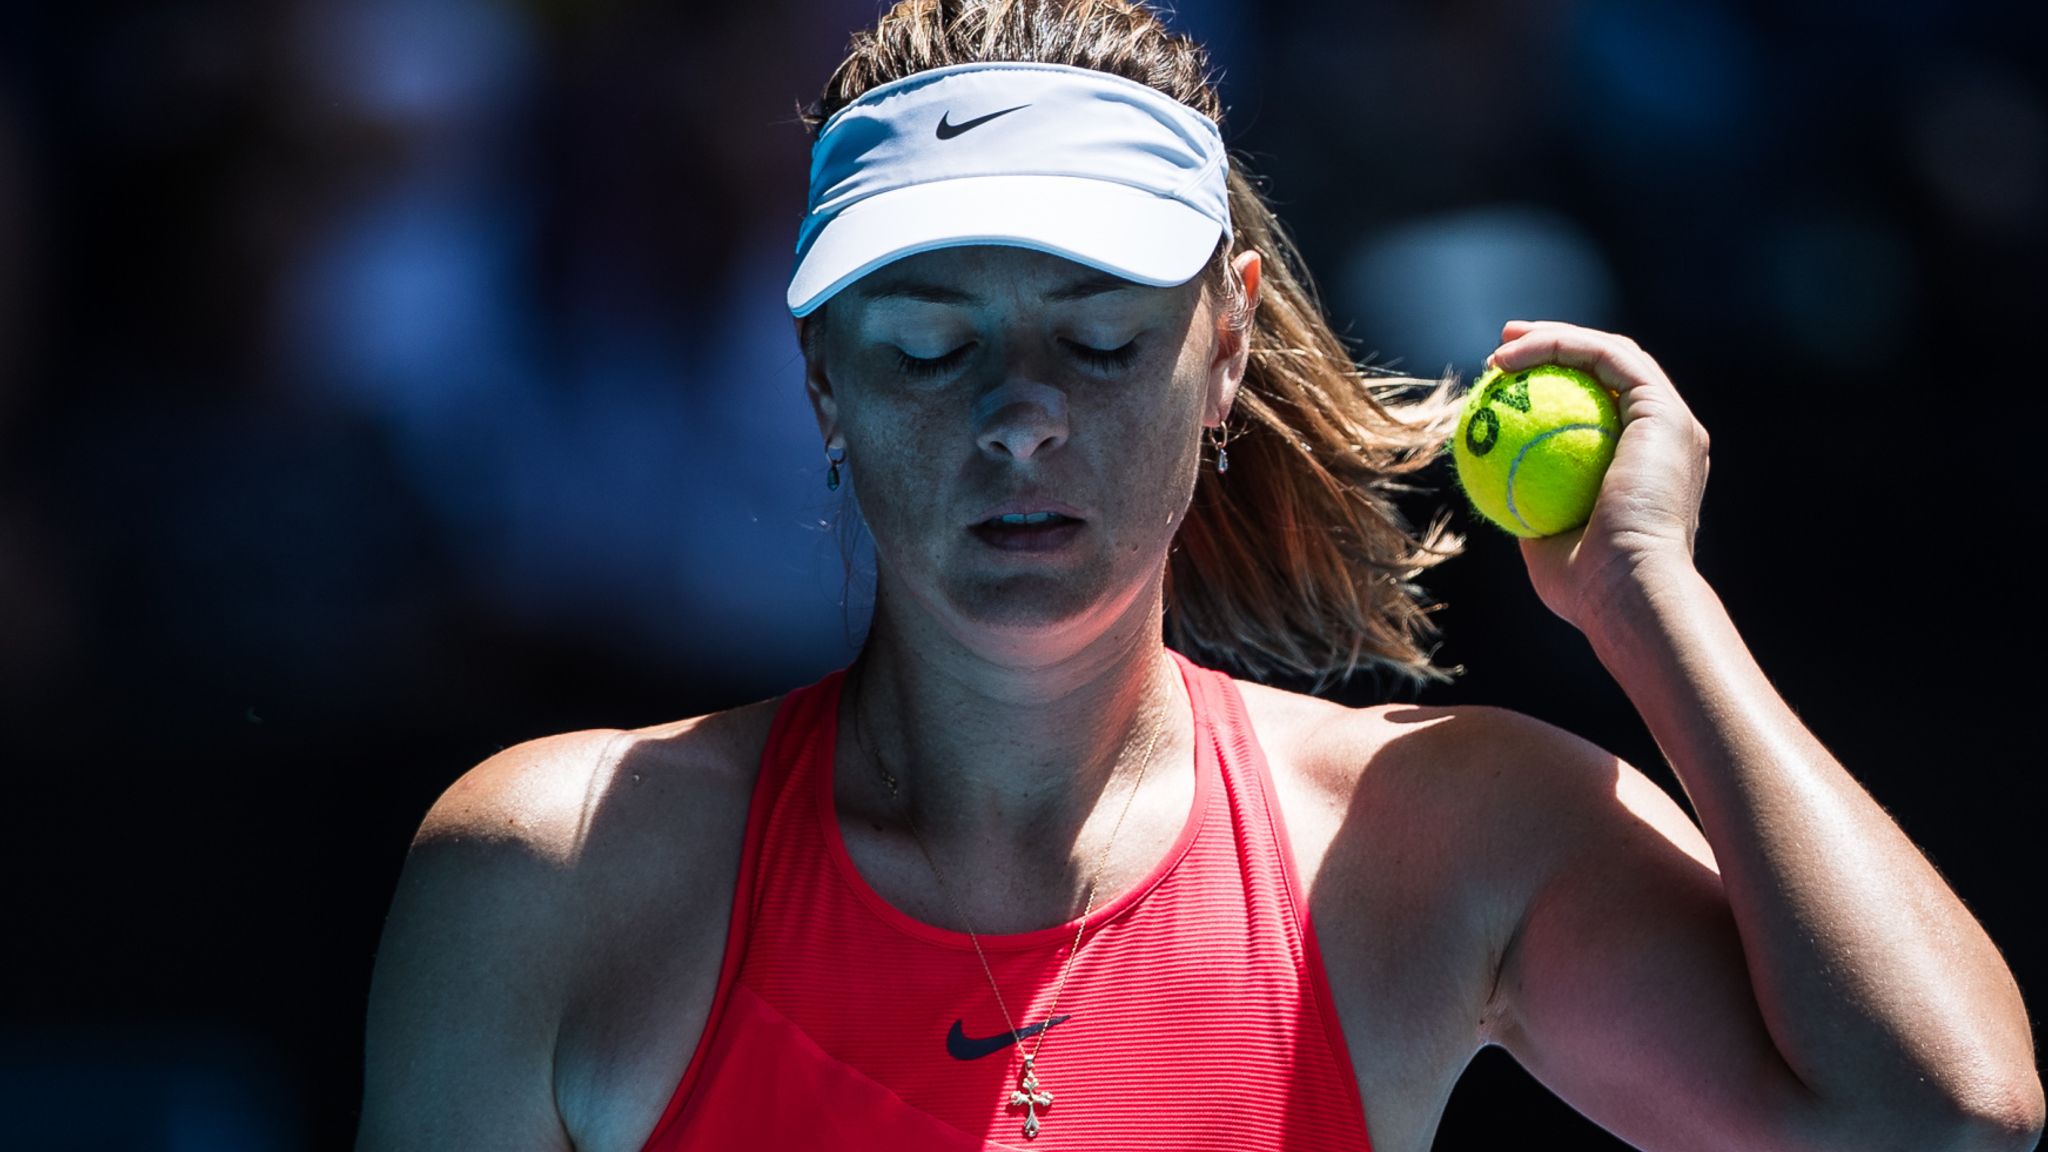 Manøvre Syge person ild Australian Open 2020: Maria Sharapova's future unclear after Donna Vekic  loss | Tennis News | Sky Sports